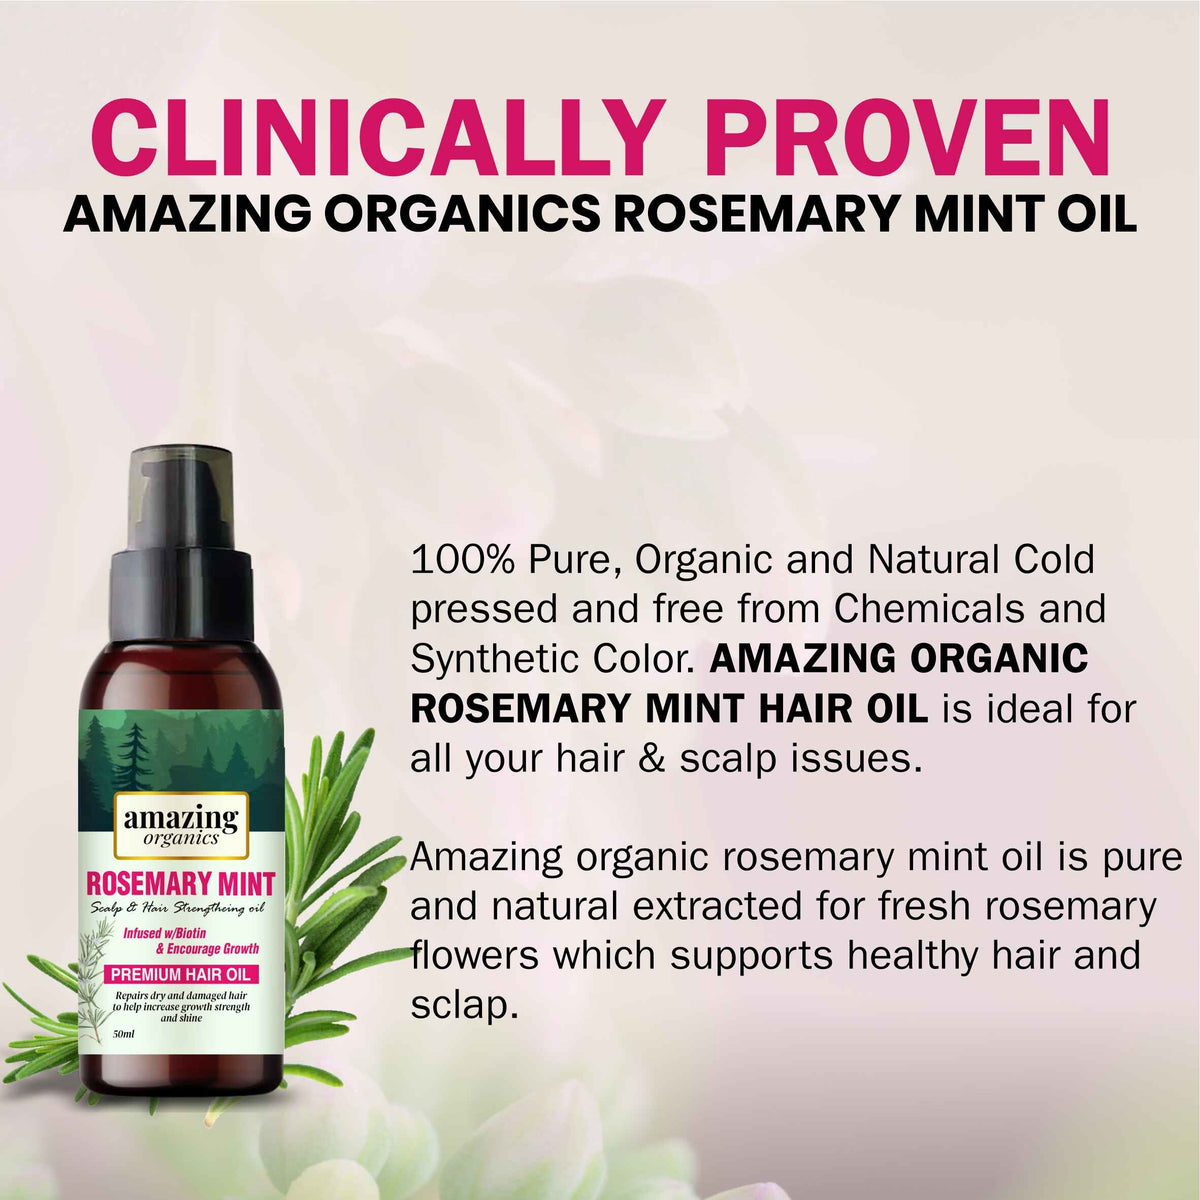 Rosemary Mint Scalp &amp; Hair Strengthening Oil with Biotin &amp; essential oils